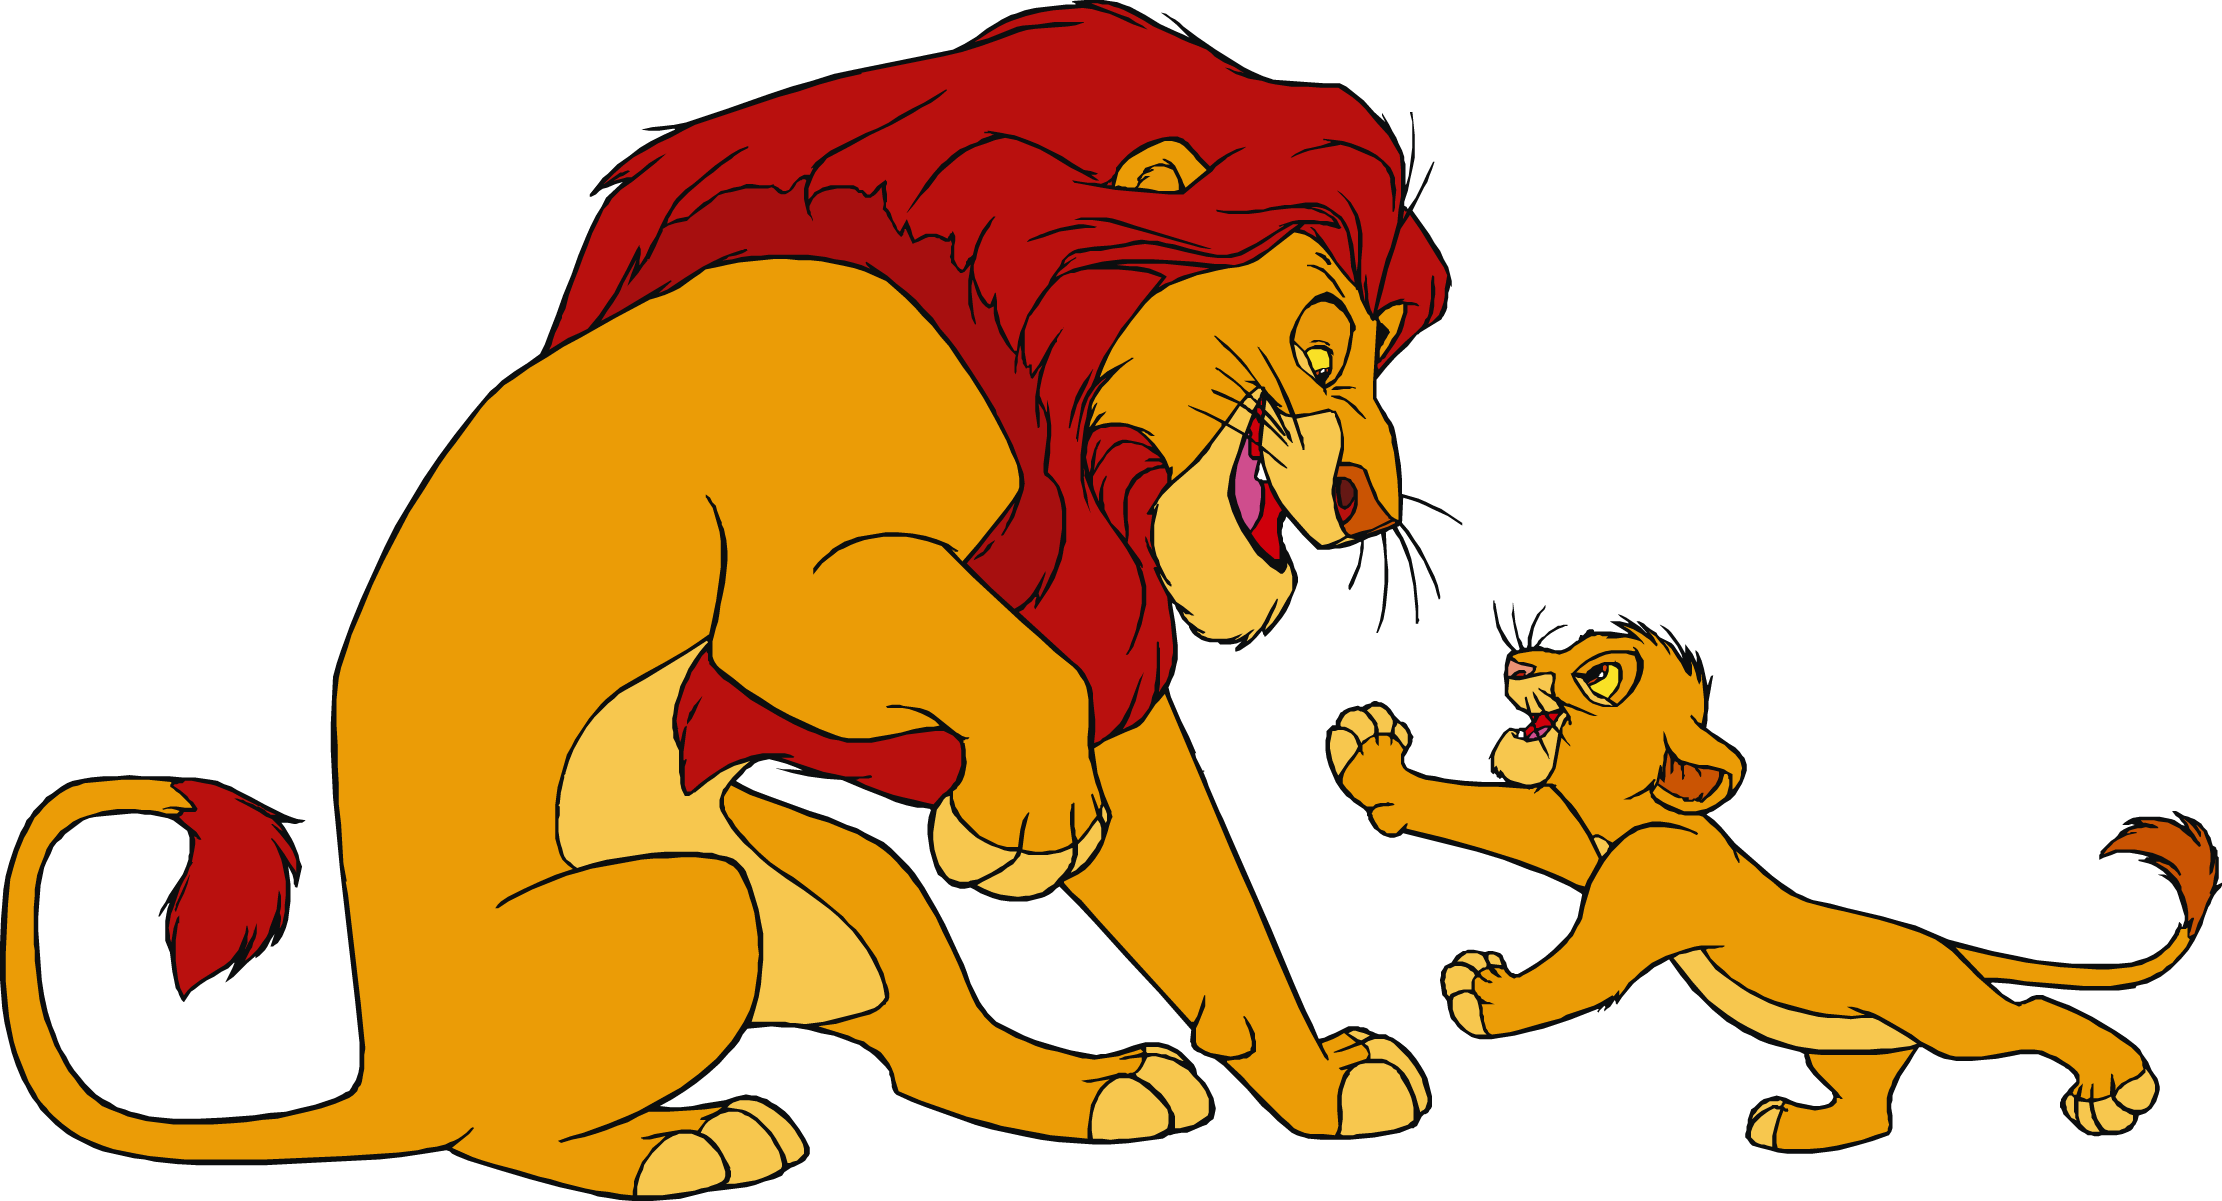 Raja singa